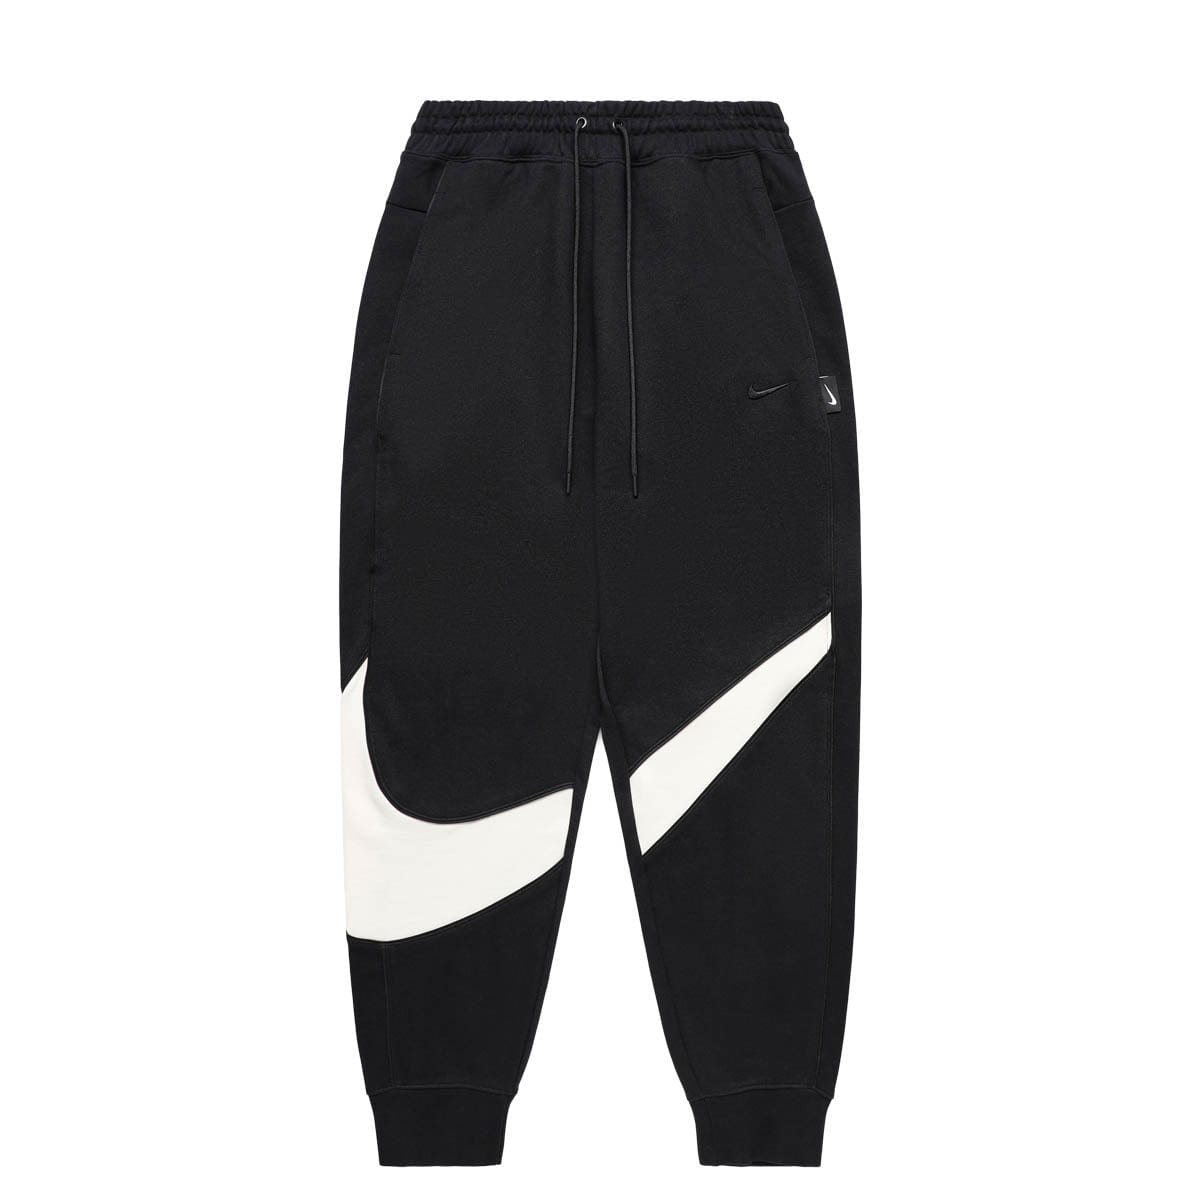 Nike Nike SWOOSH Fleece PANTs Black - BLACK/COCONUT MILK/BLACK